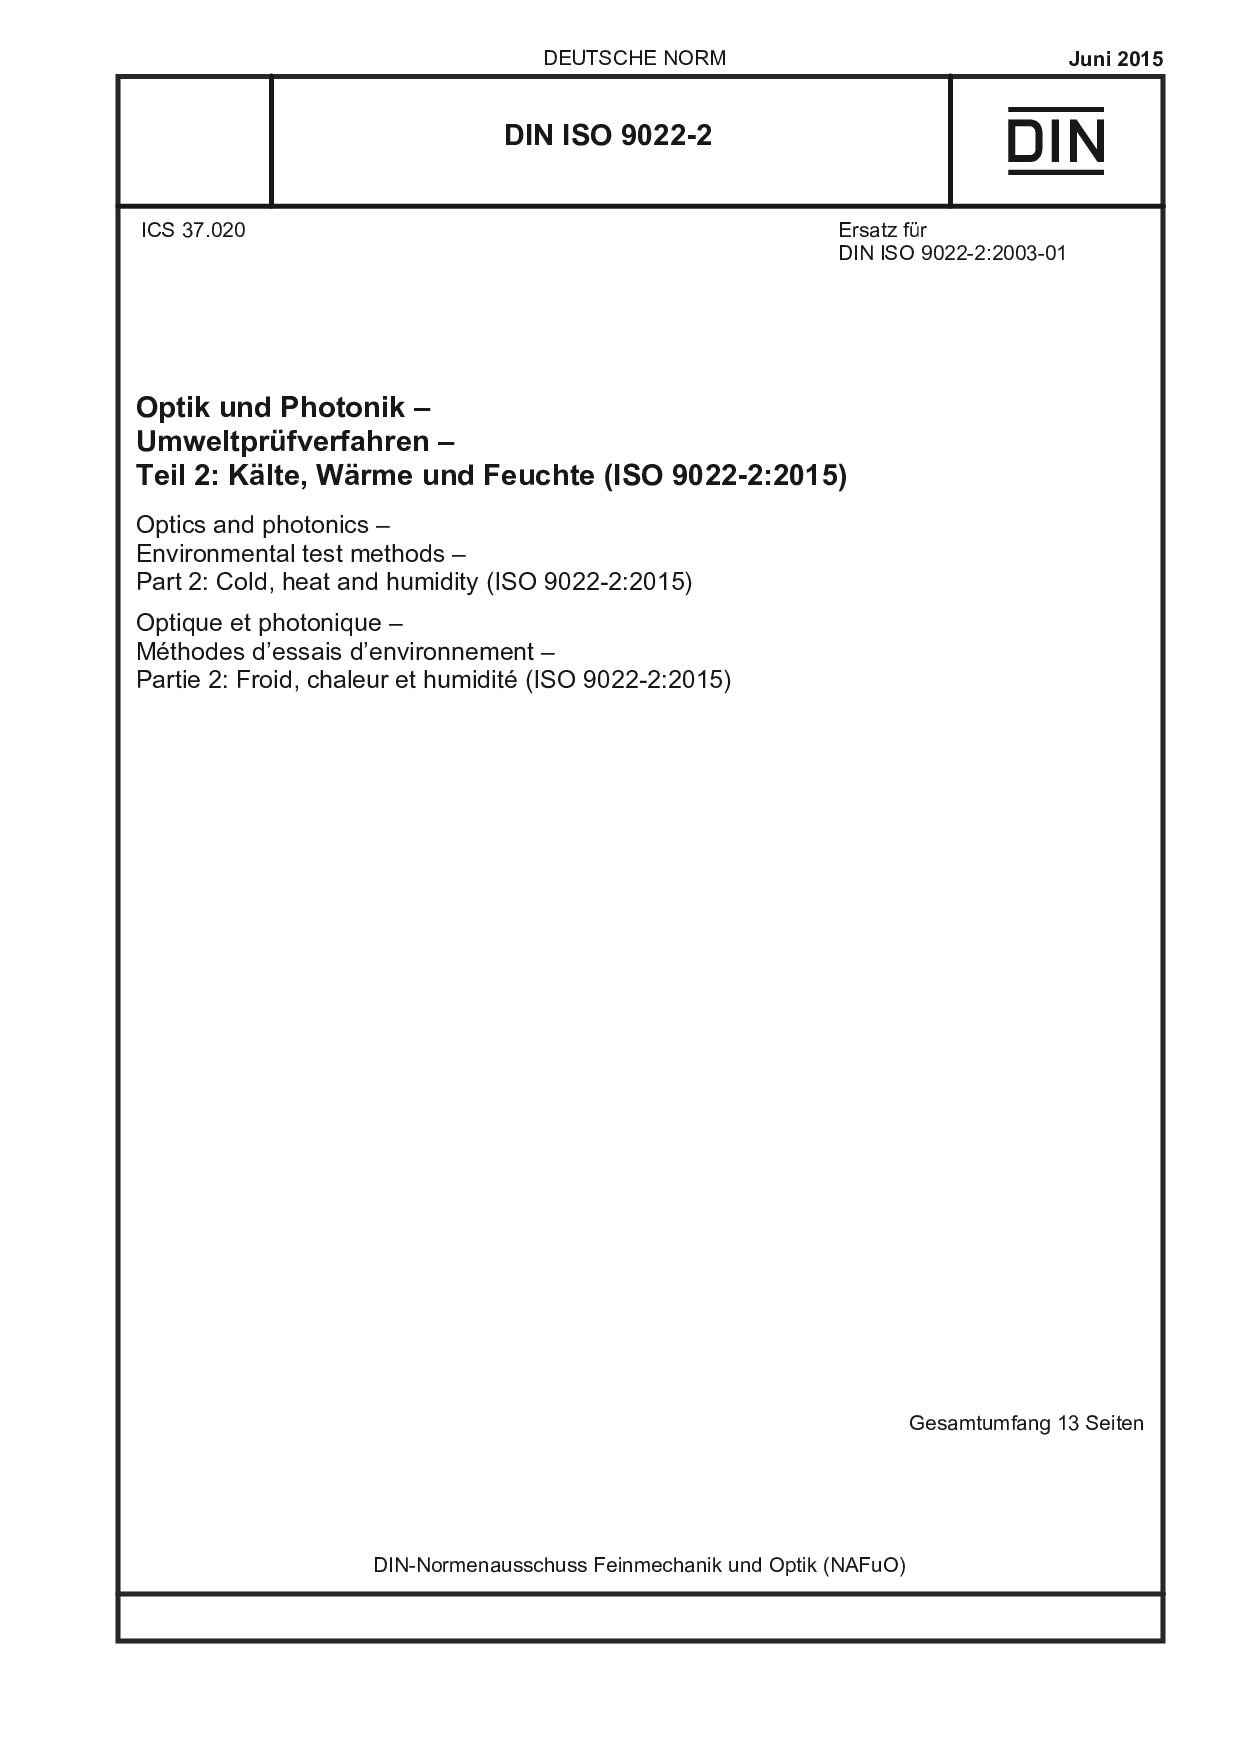 DIN ISO 9022-2:2015-06